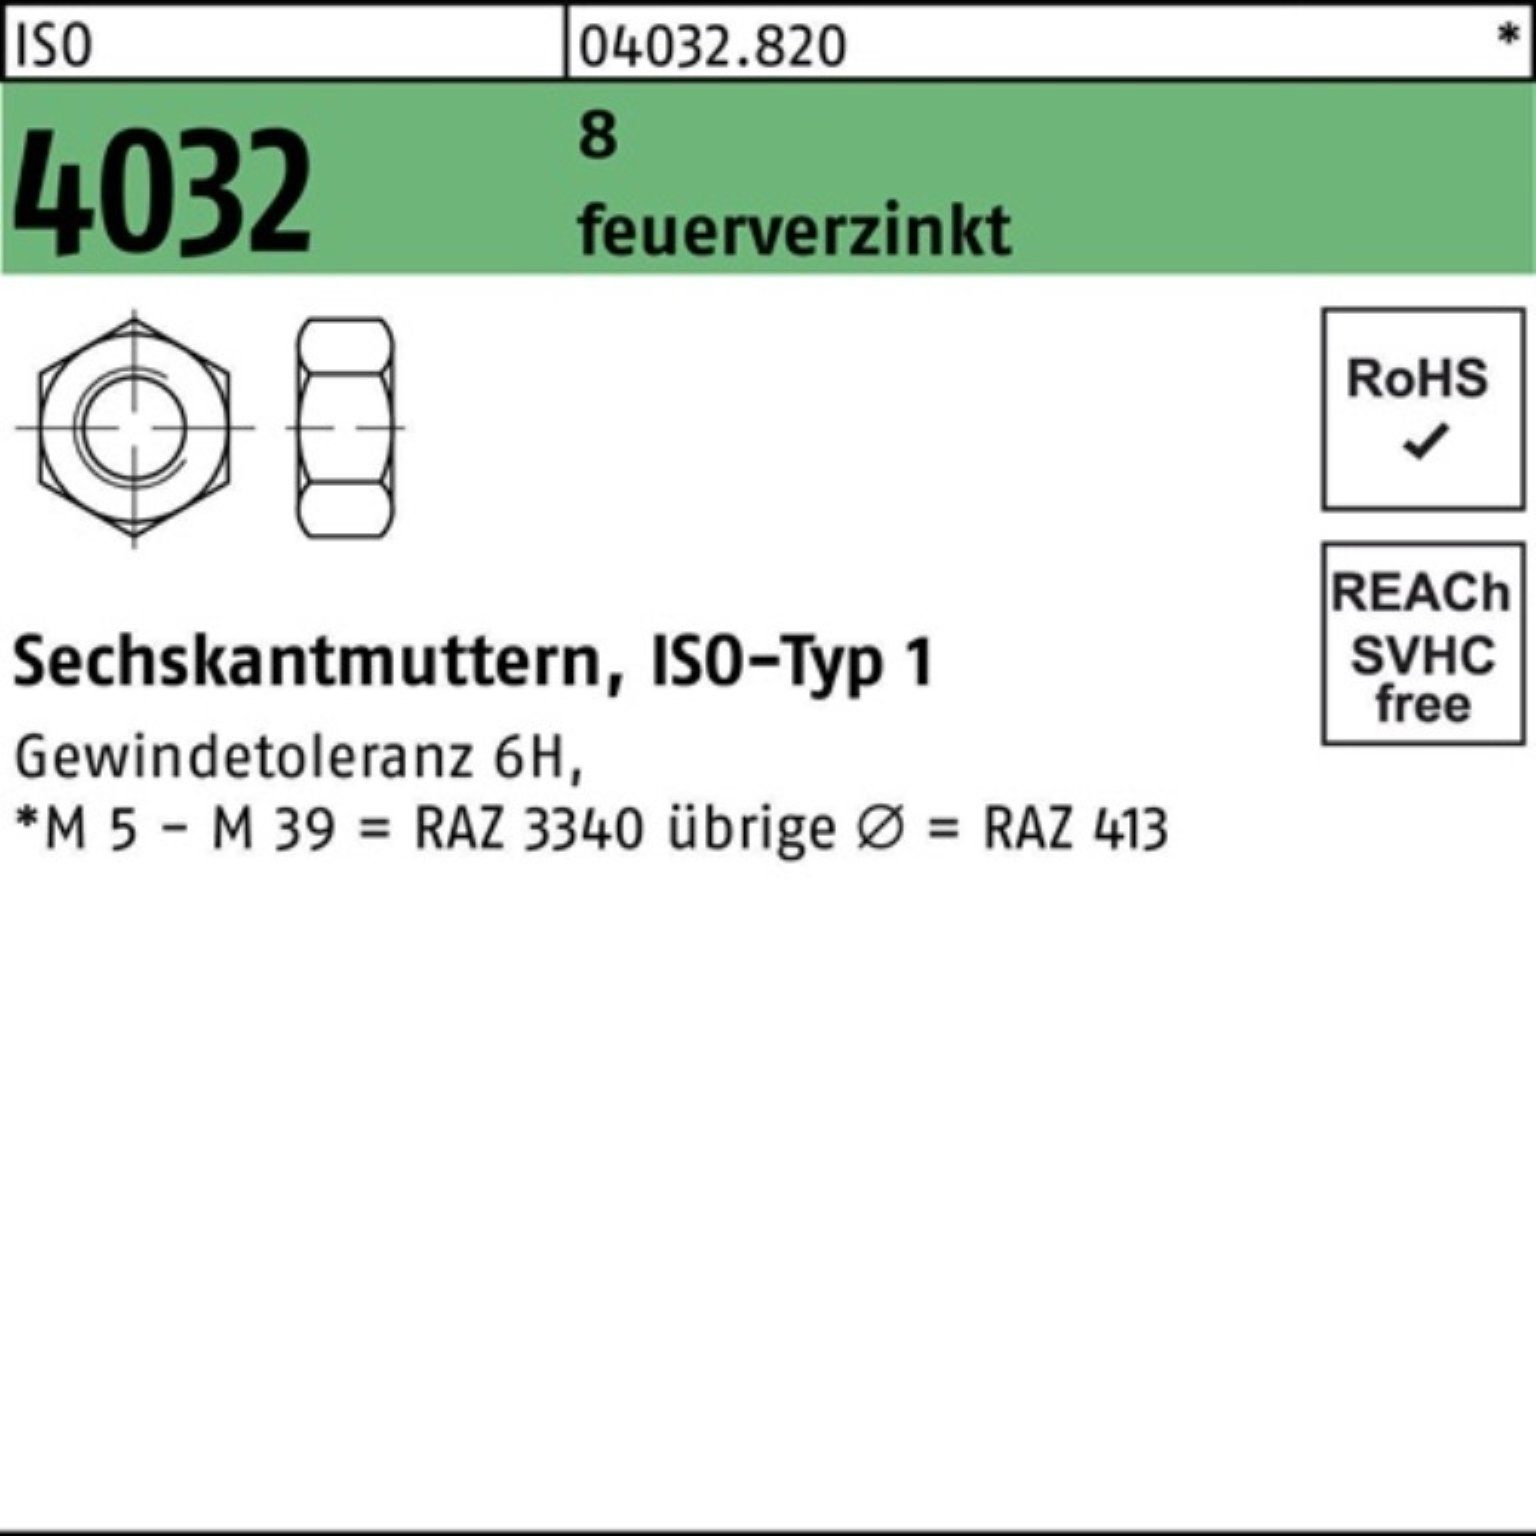 500 8 ISO M14 Sechskantmutter feuerverz. Bufab Stück 4032 ISO Pack Muttern 40 500er